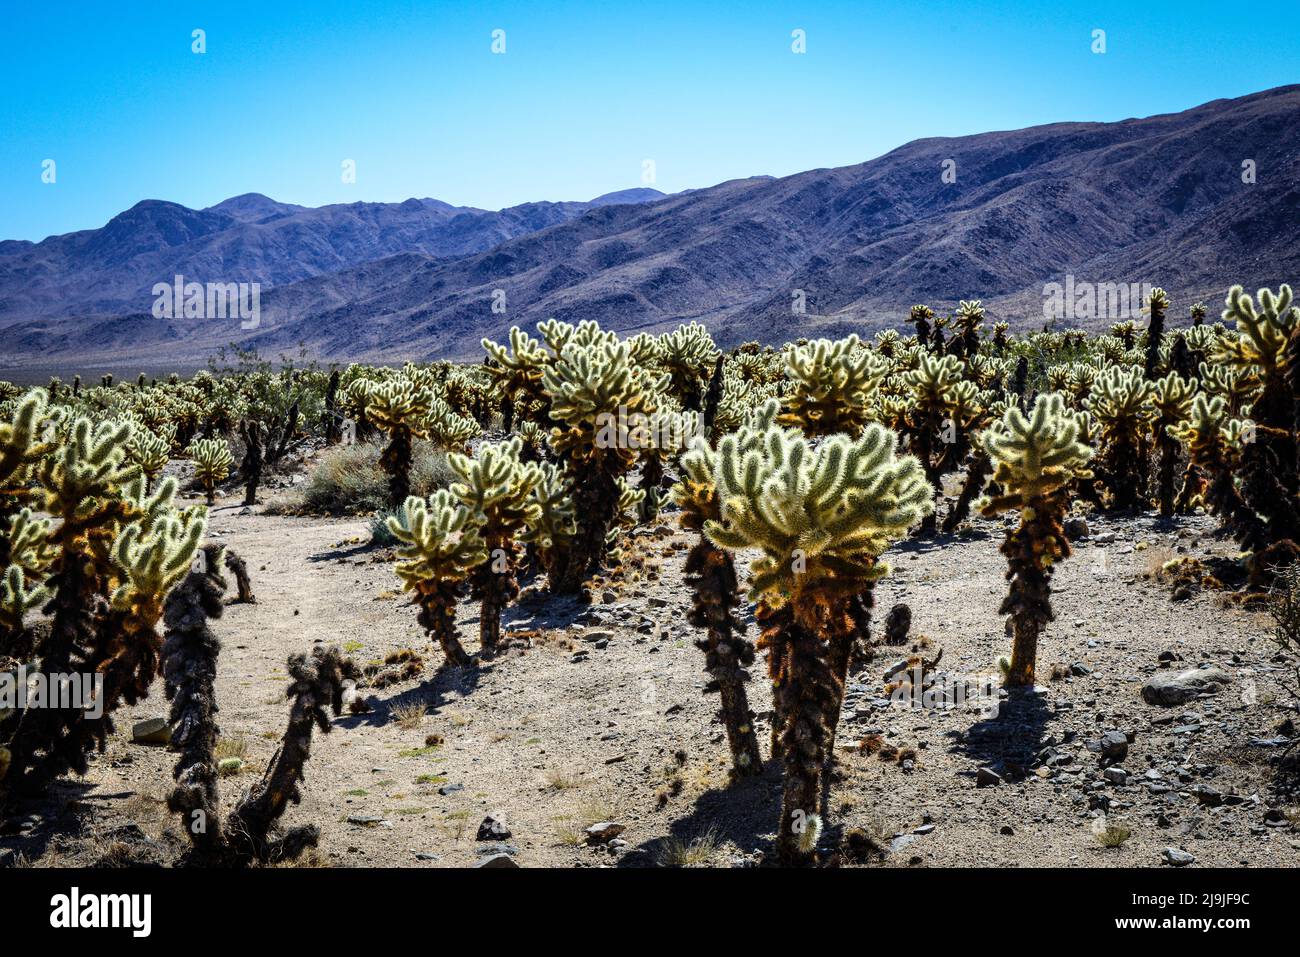 The unique Cholla cactus garden in Joshua tree National Park in the Mojave desert, CA Stock Photo